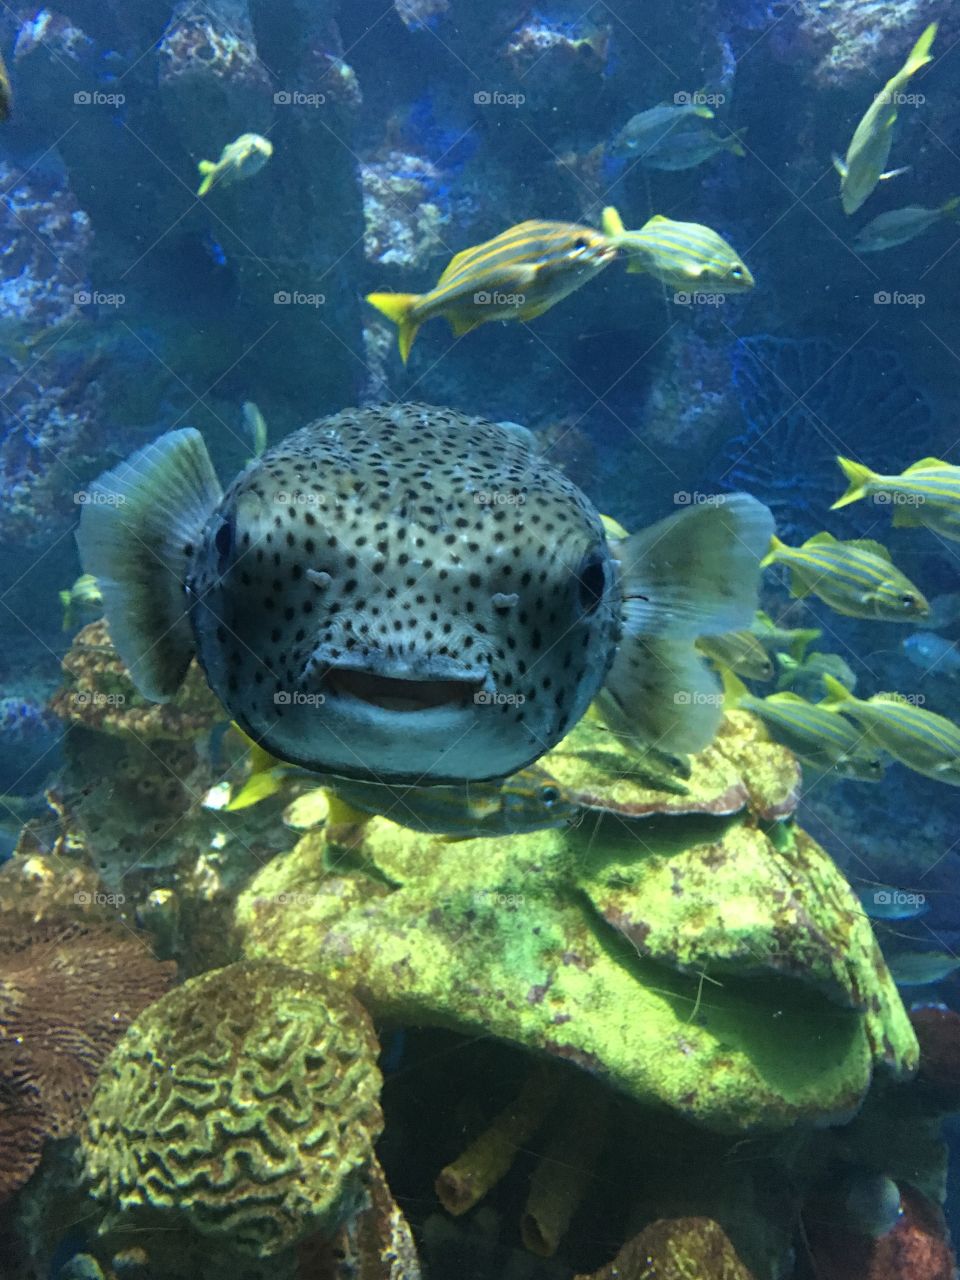 Cool fish at the New England Aquarium